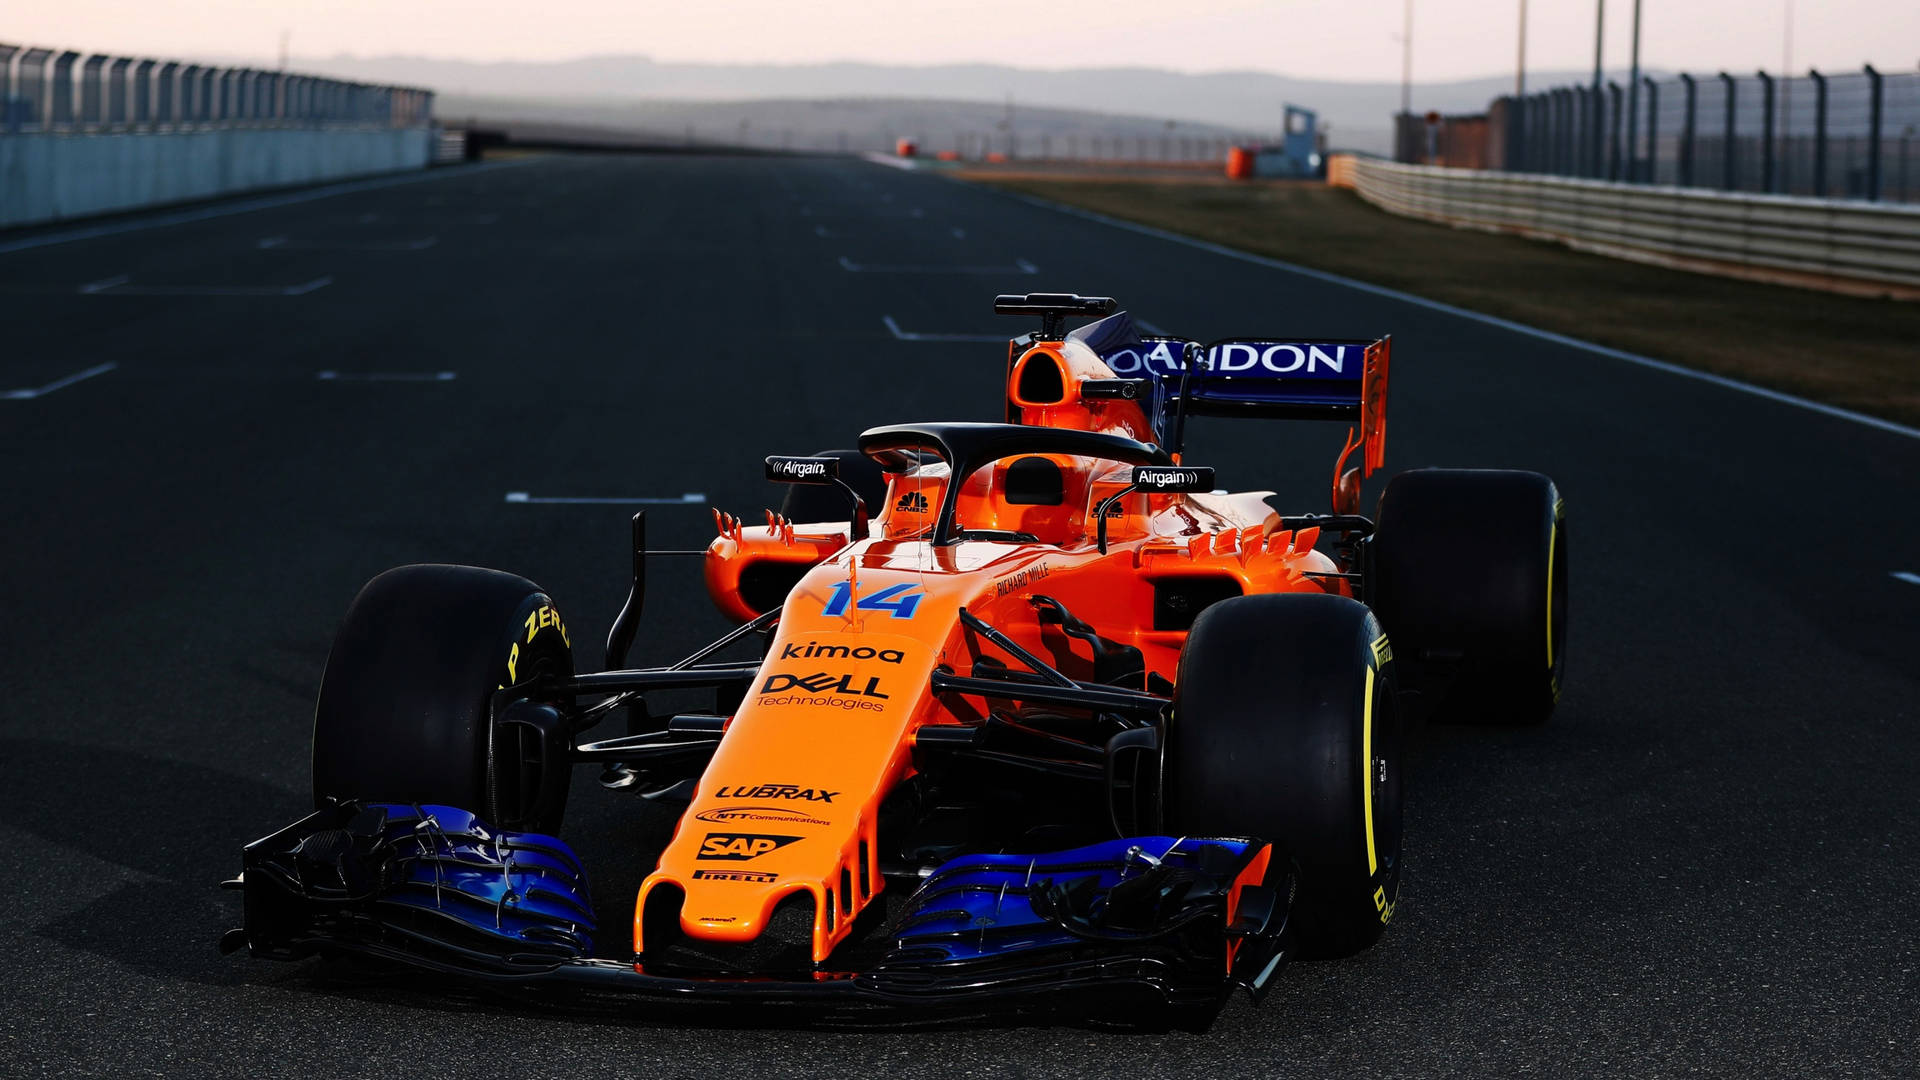 Intense Racing Action at the Formula 1 Grand Prix 2019 Wallpaper